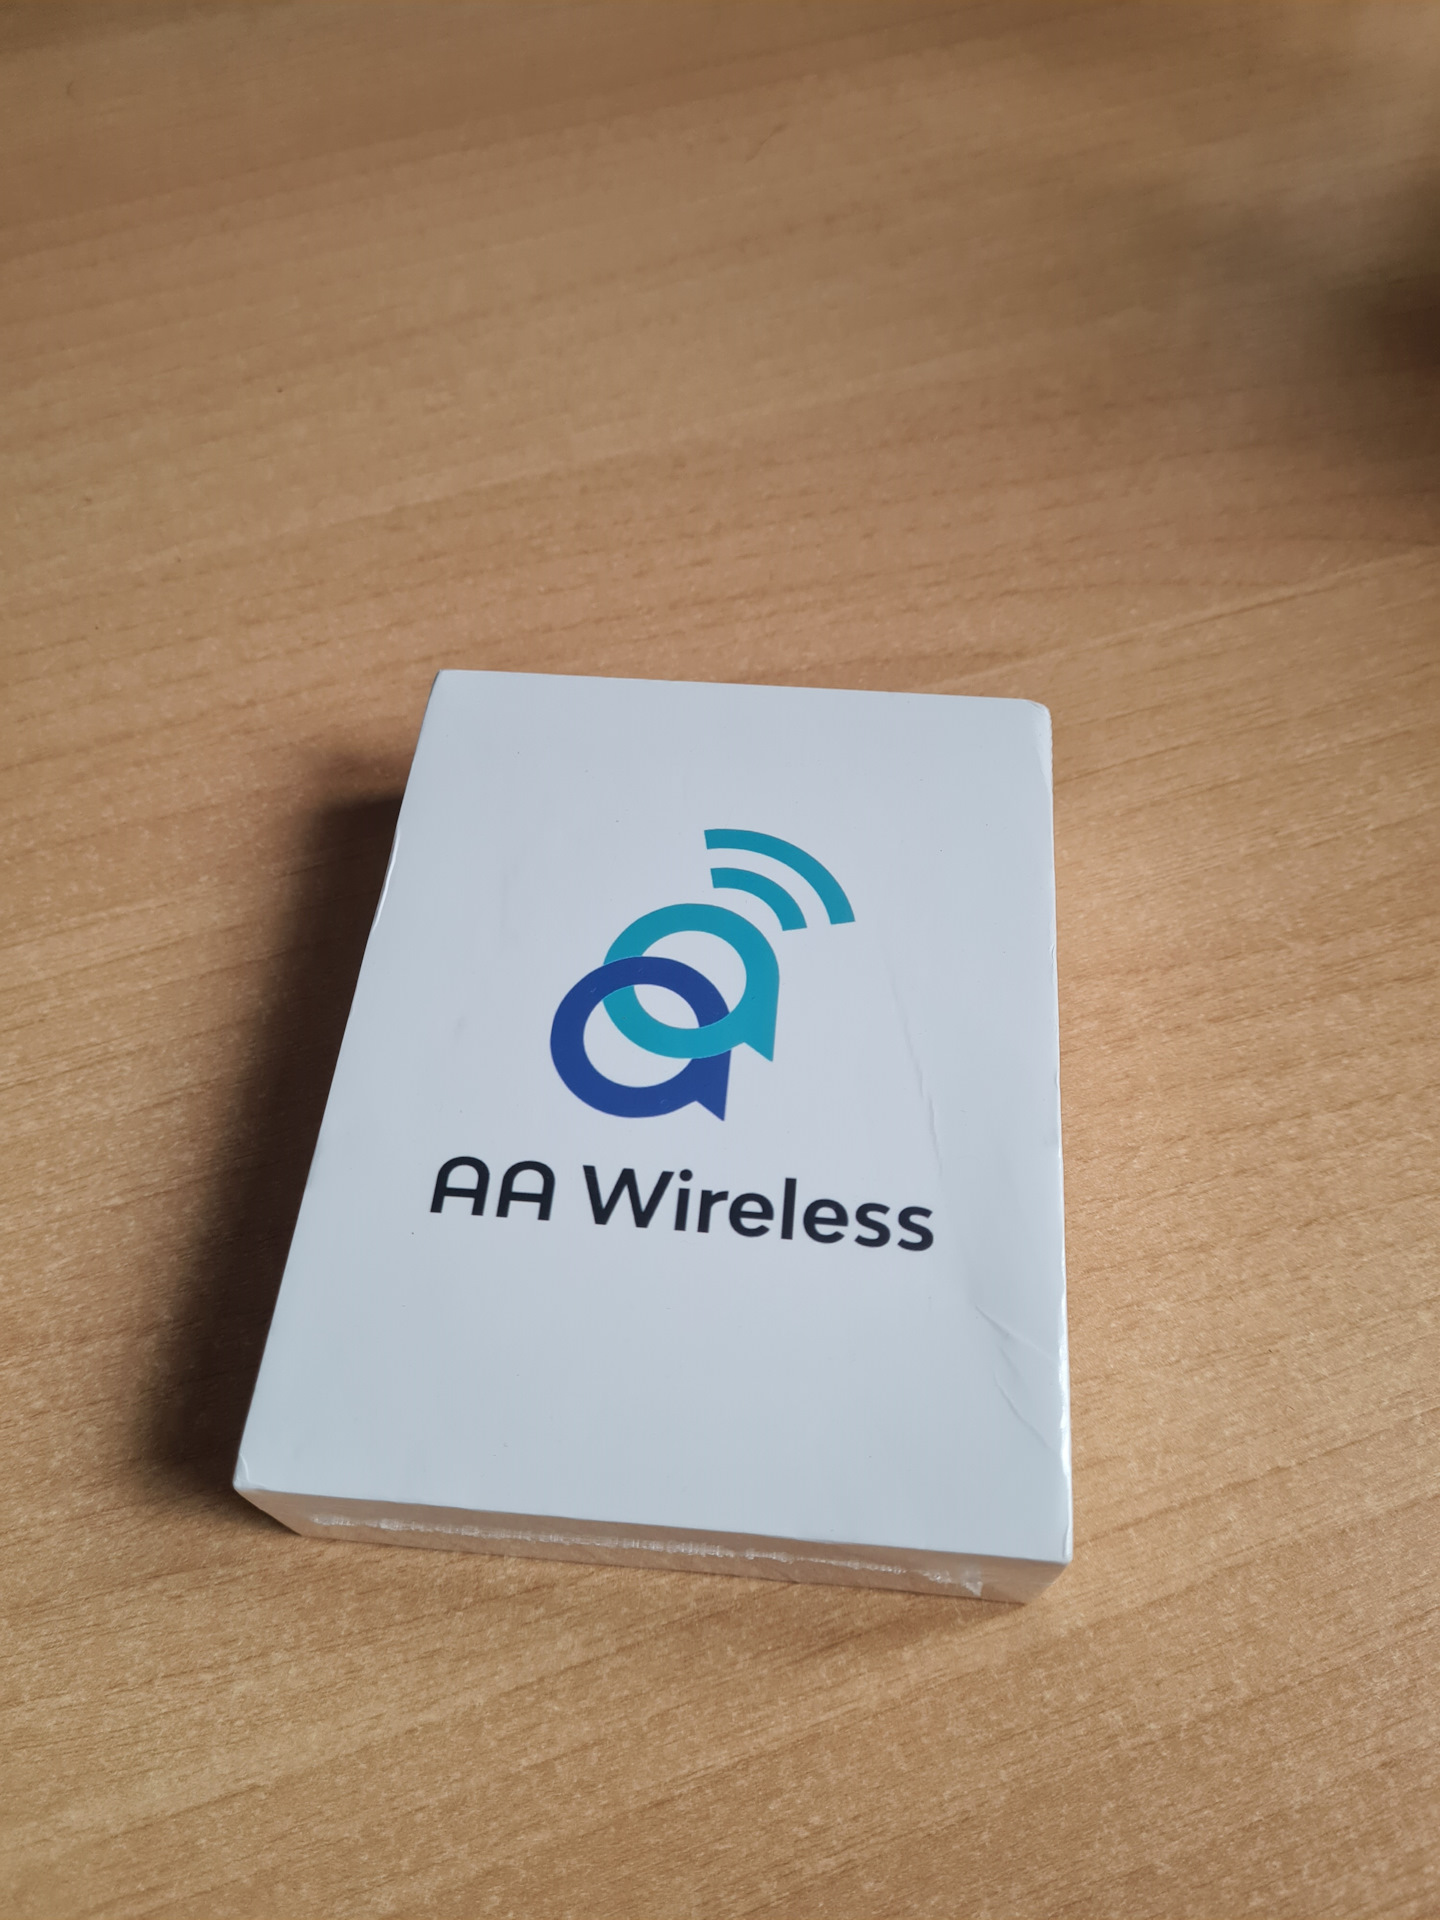 Android Auto sans fil : AA Wireless propose-t-il la meilleure box